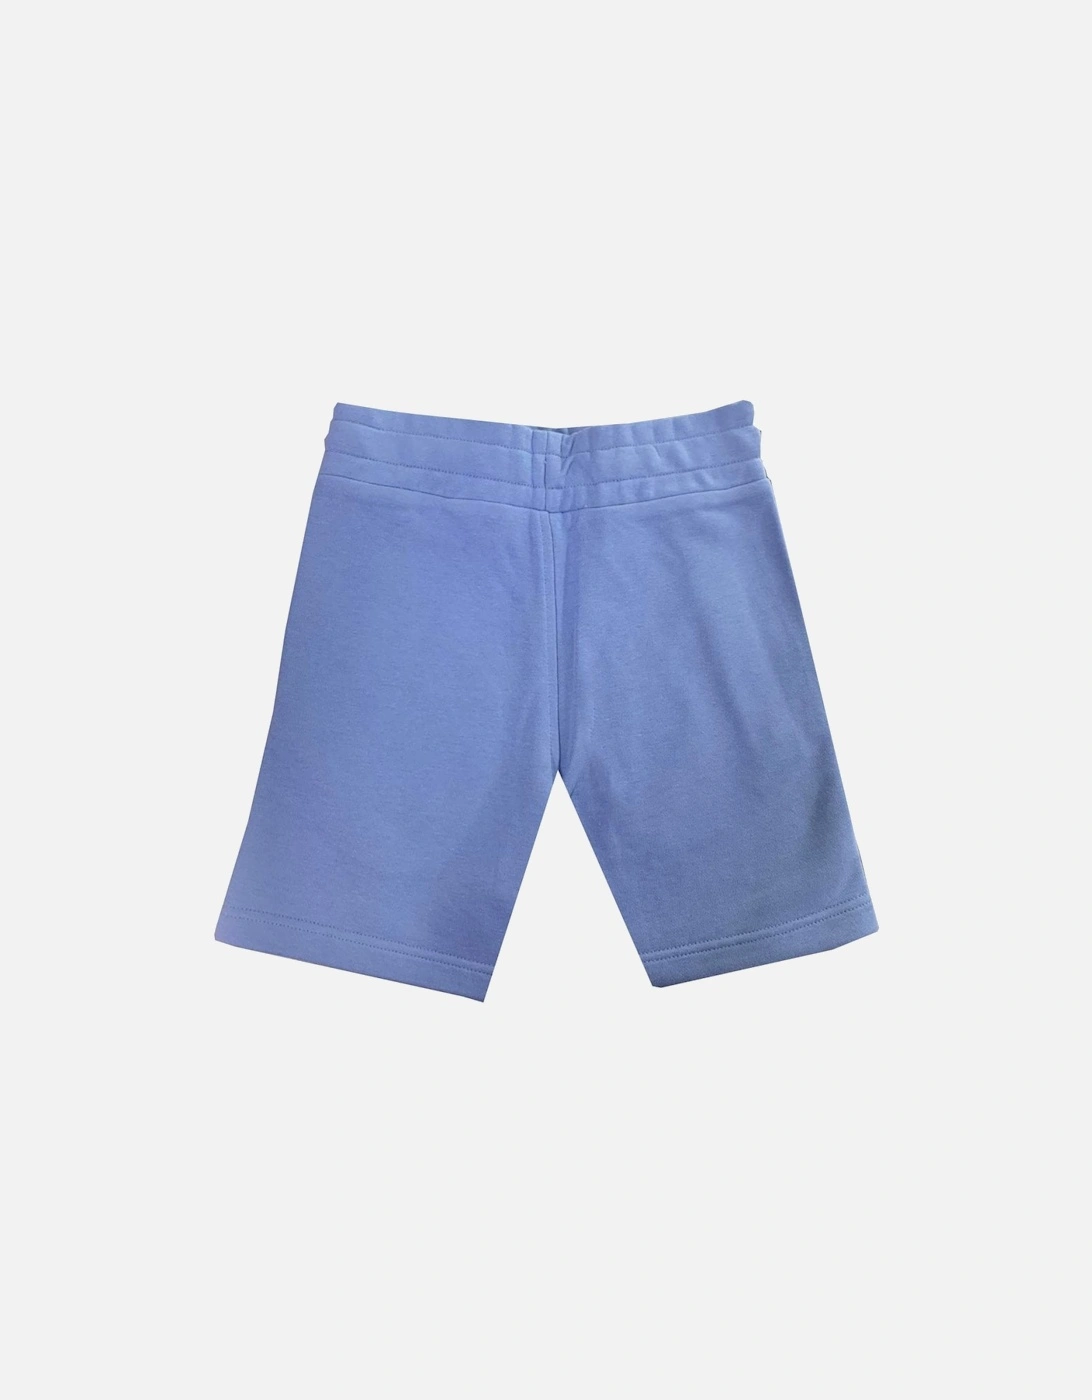 Boy's Light Blue Shorts With White Logo